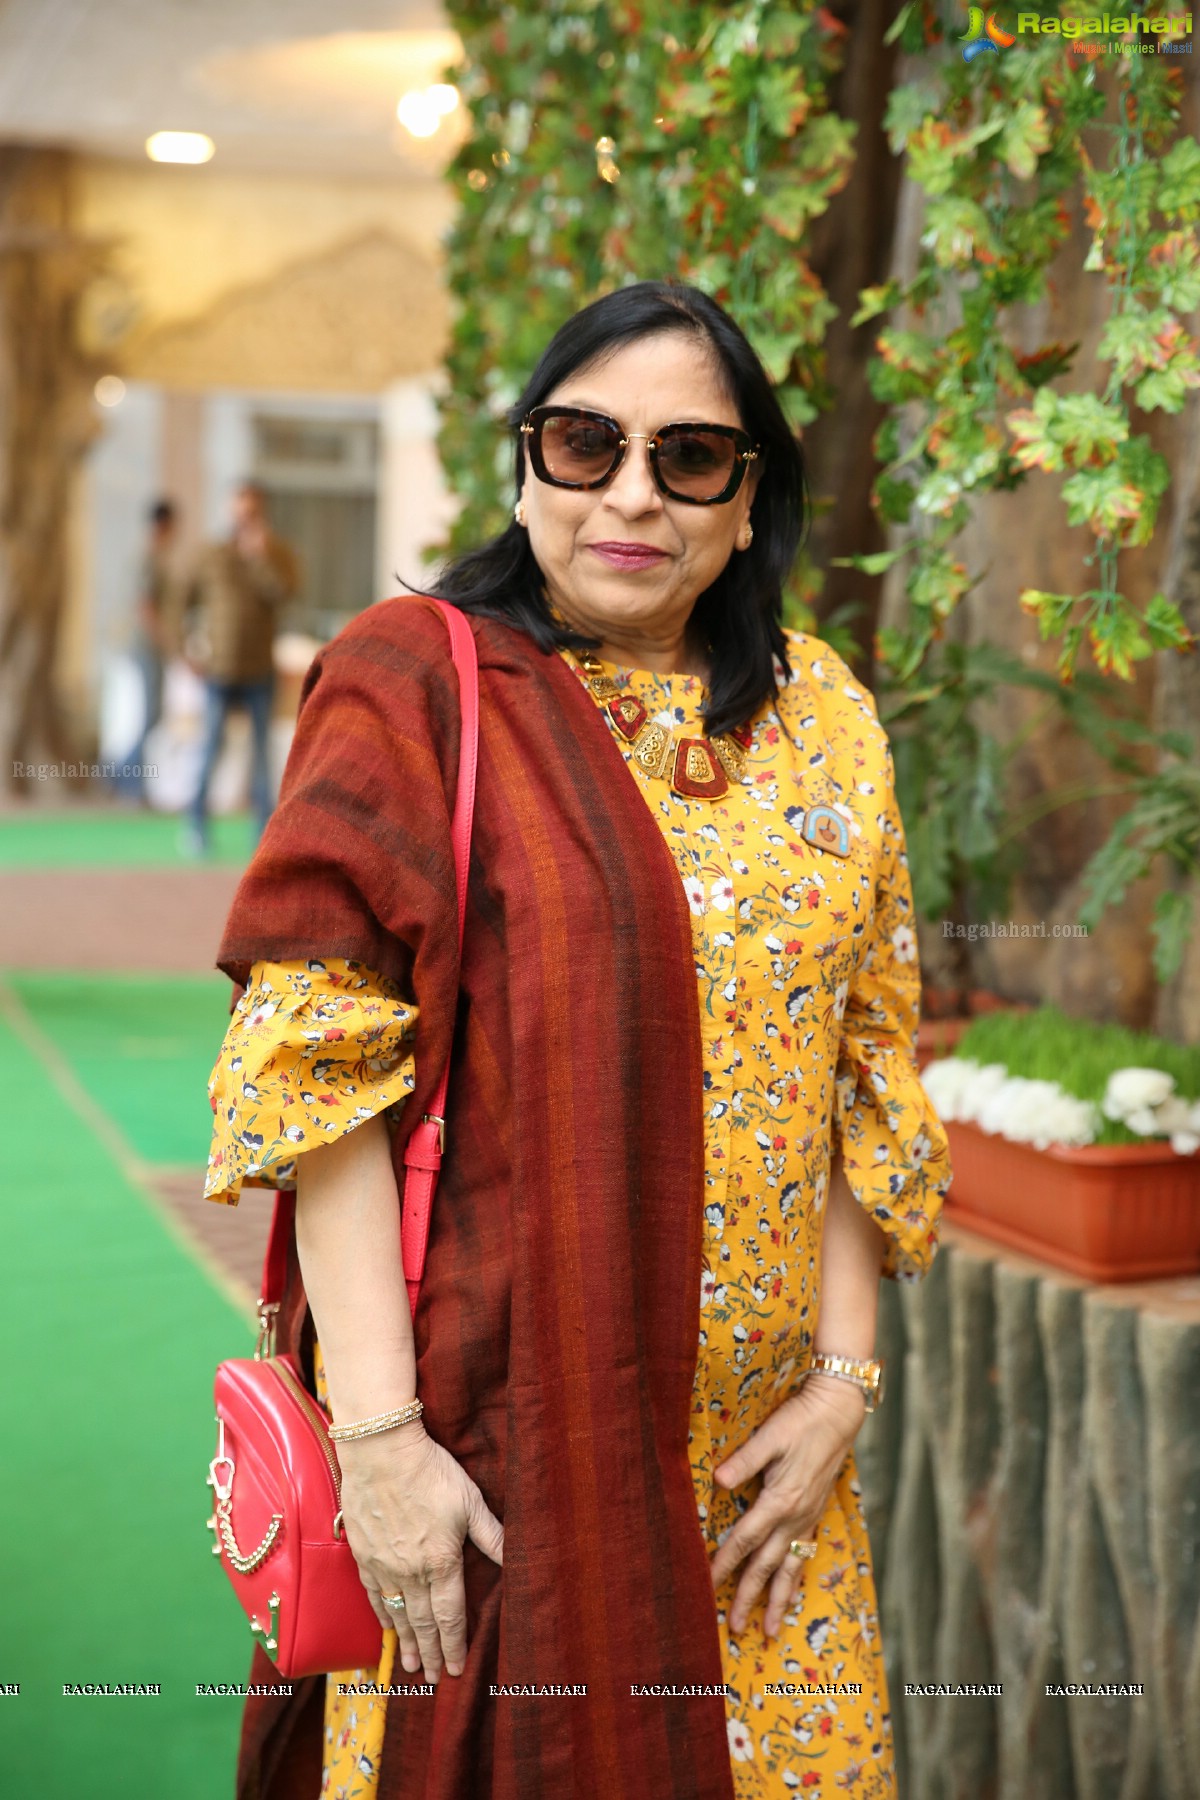 Hari Chandana Dasari Inaugurates Deep Mela 2019 at Classic Gardens, Secunderabad